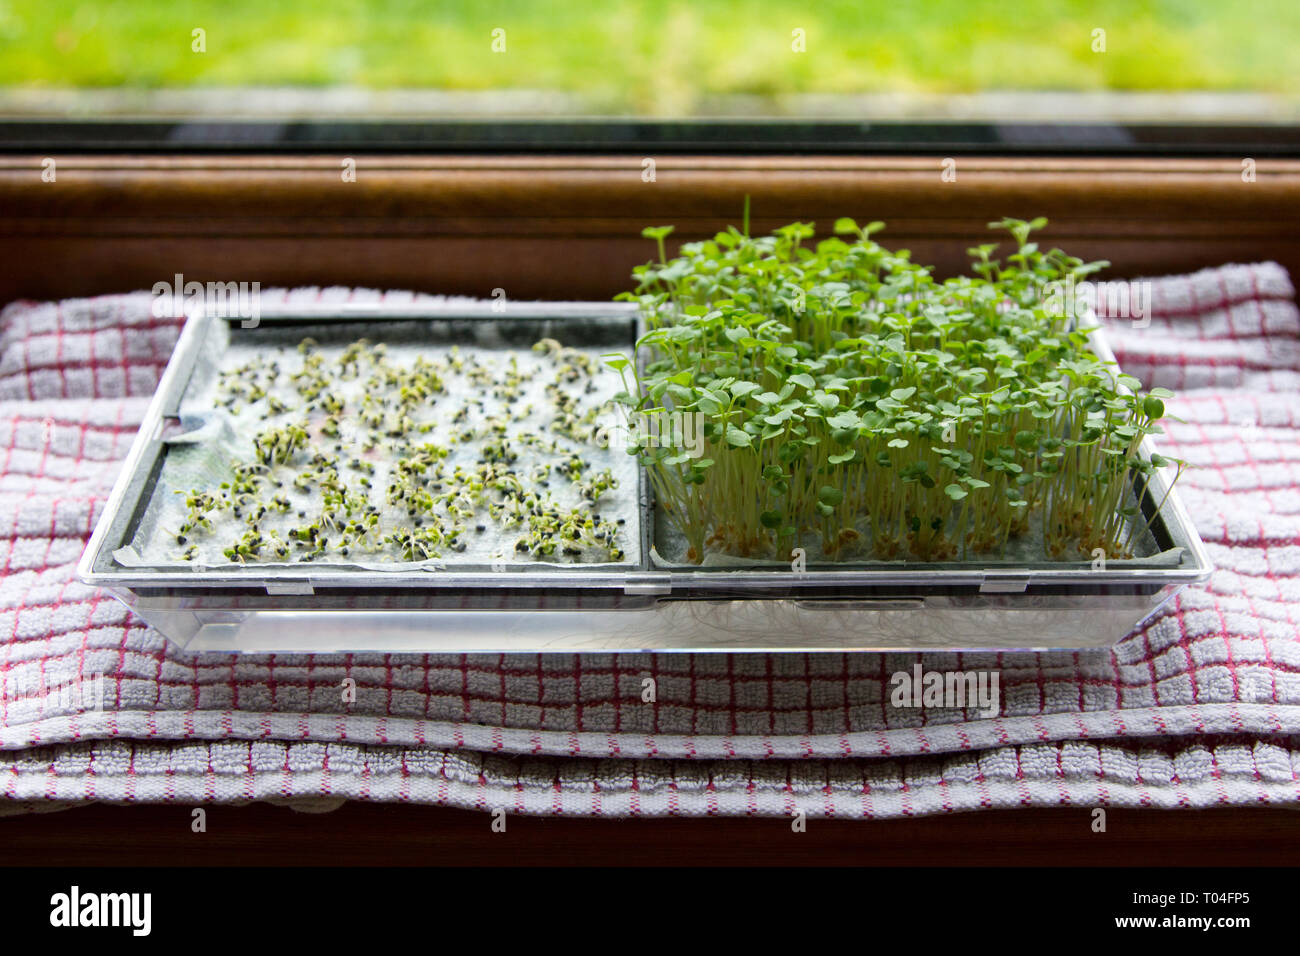 Salad seedlings growing on a windowsill Stock Photo